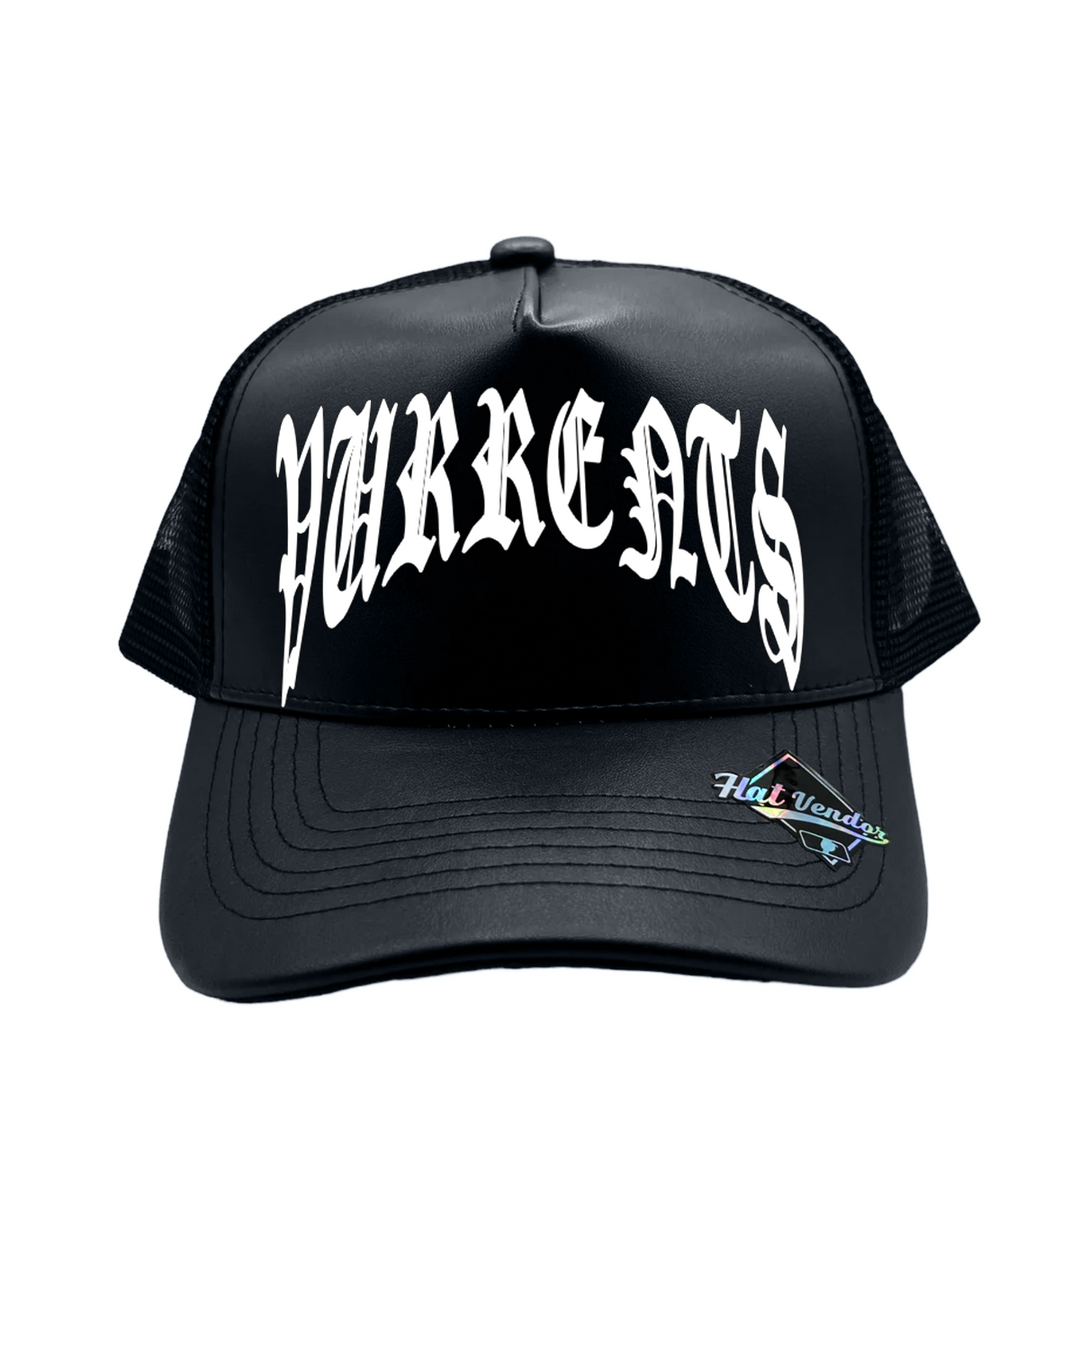 Vurrents Black Leather Truckers Hat